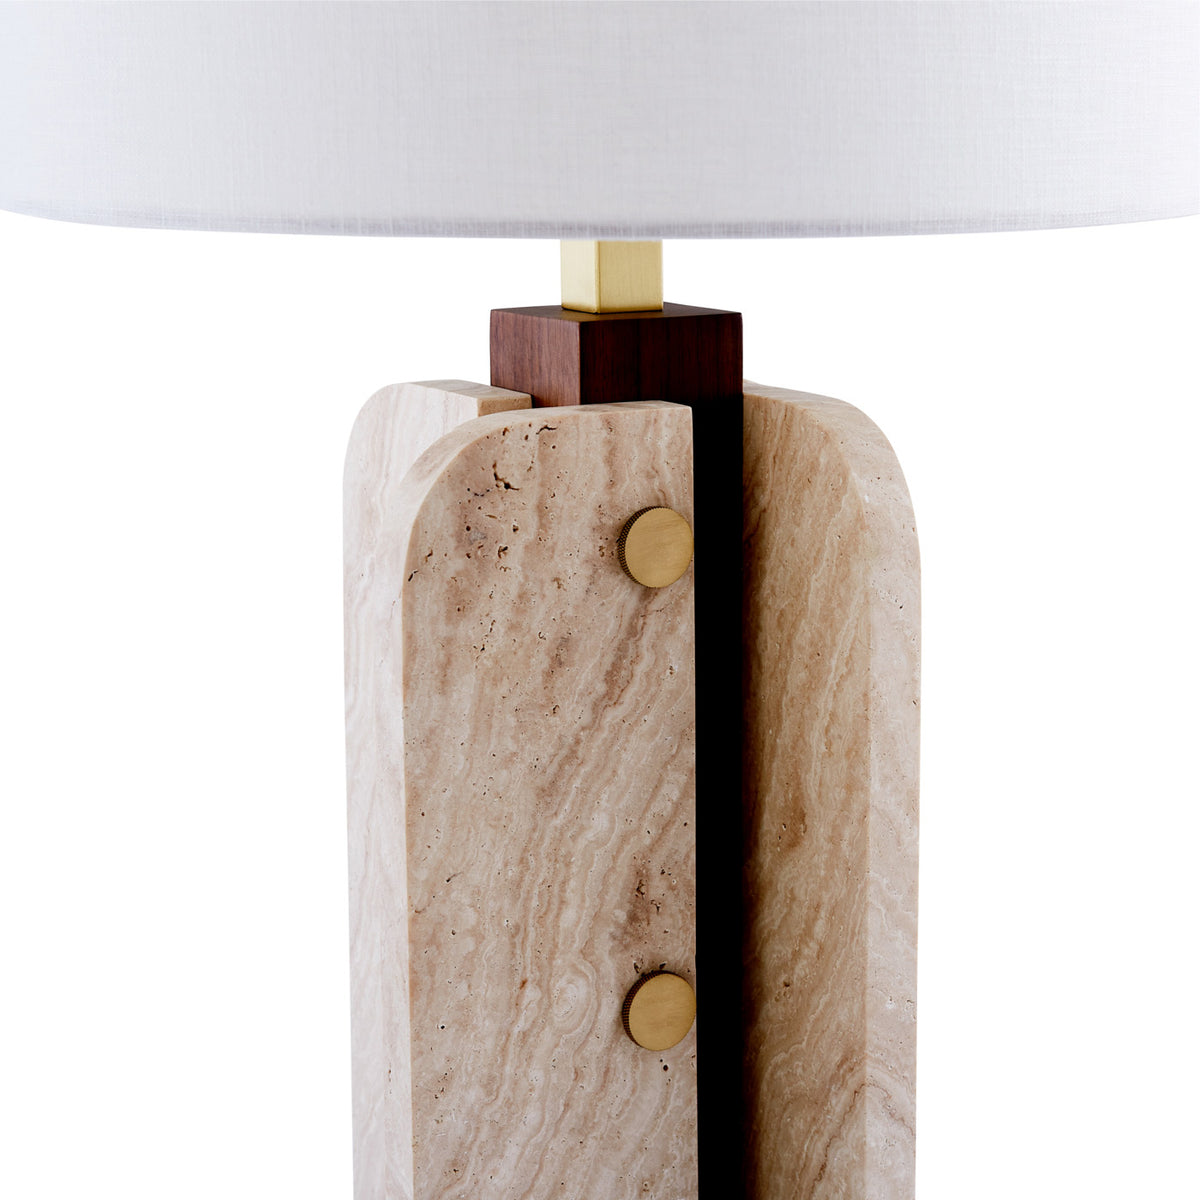 Topanga Column Table Lamp by Jonathan Adler